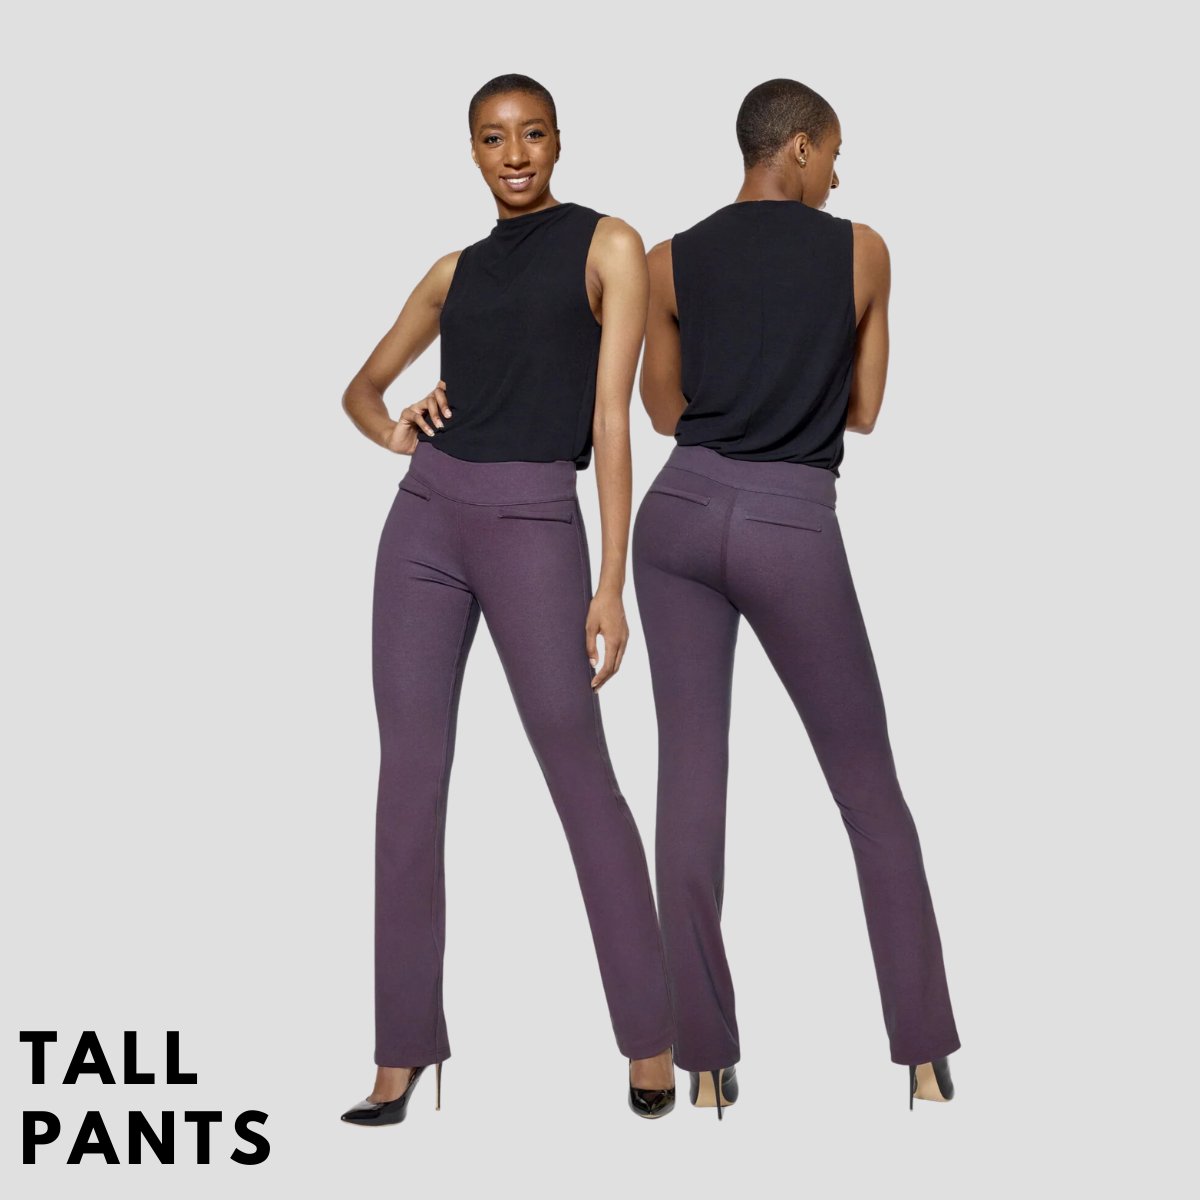 Women's Tall Pants